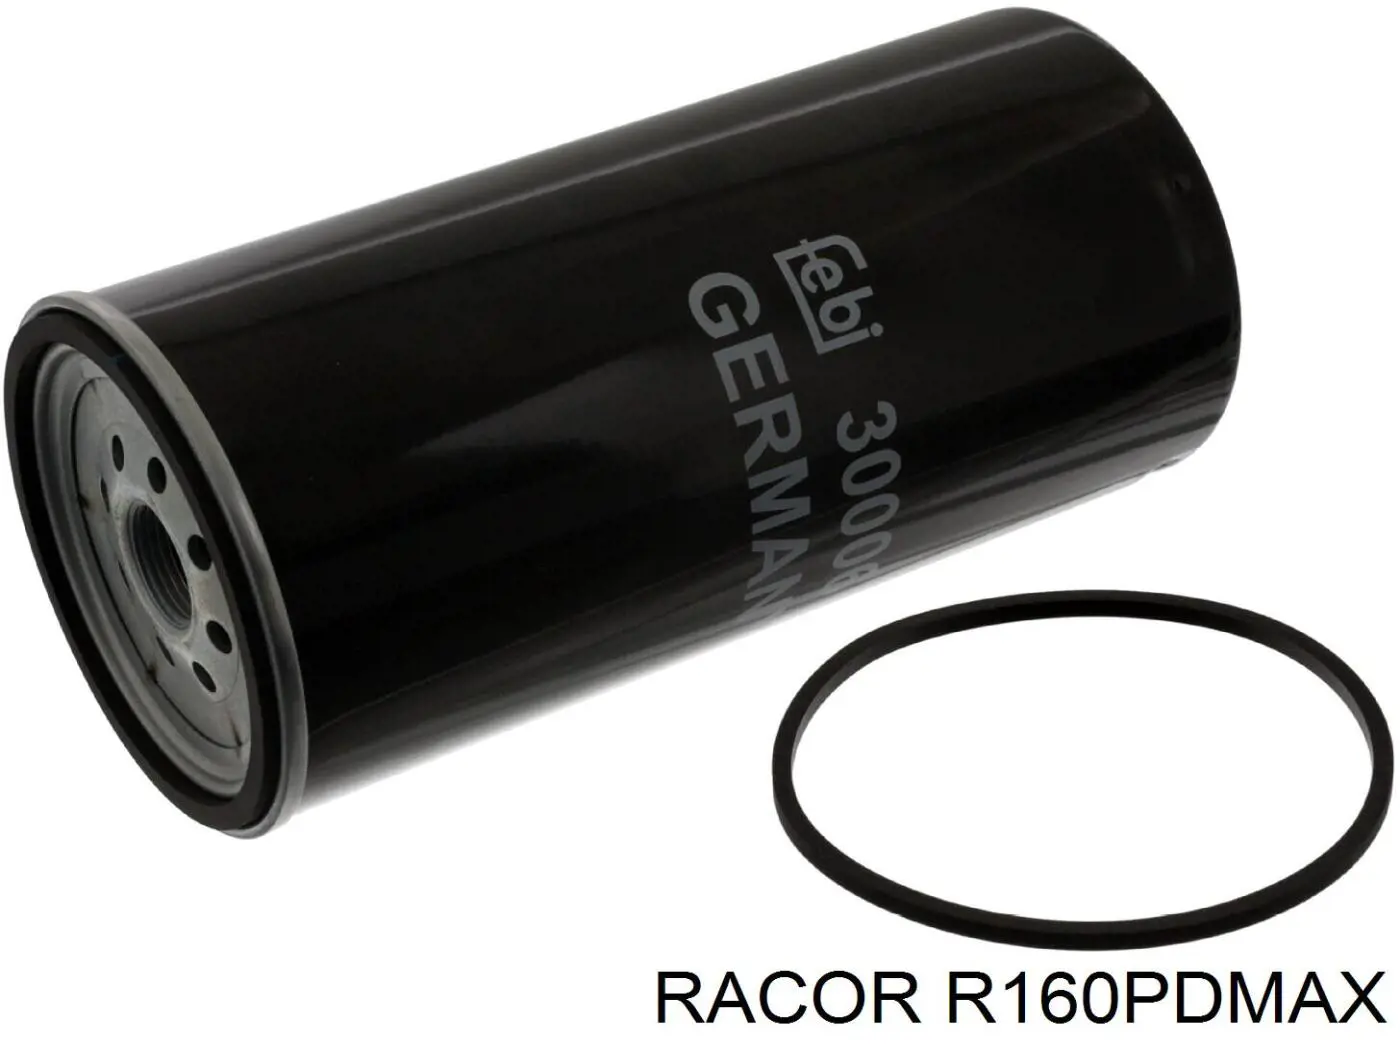 R160P-D-MAX Racor топливный фильтр